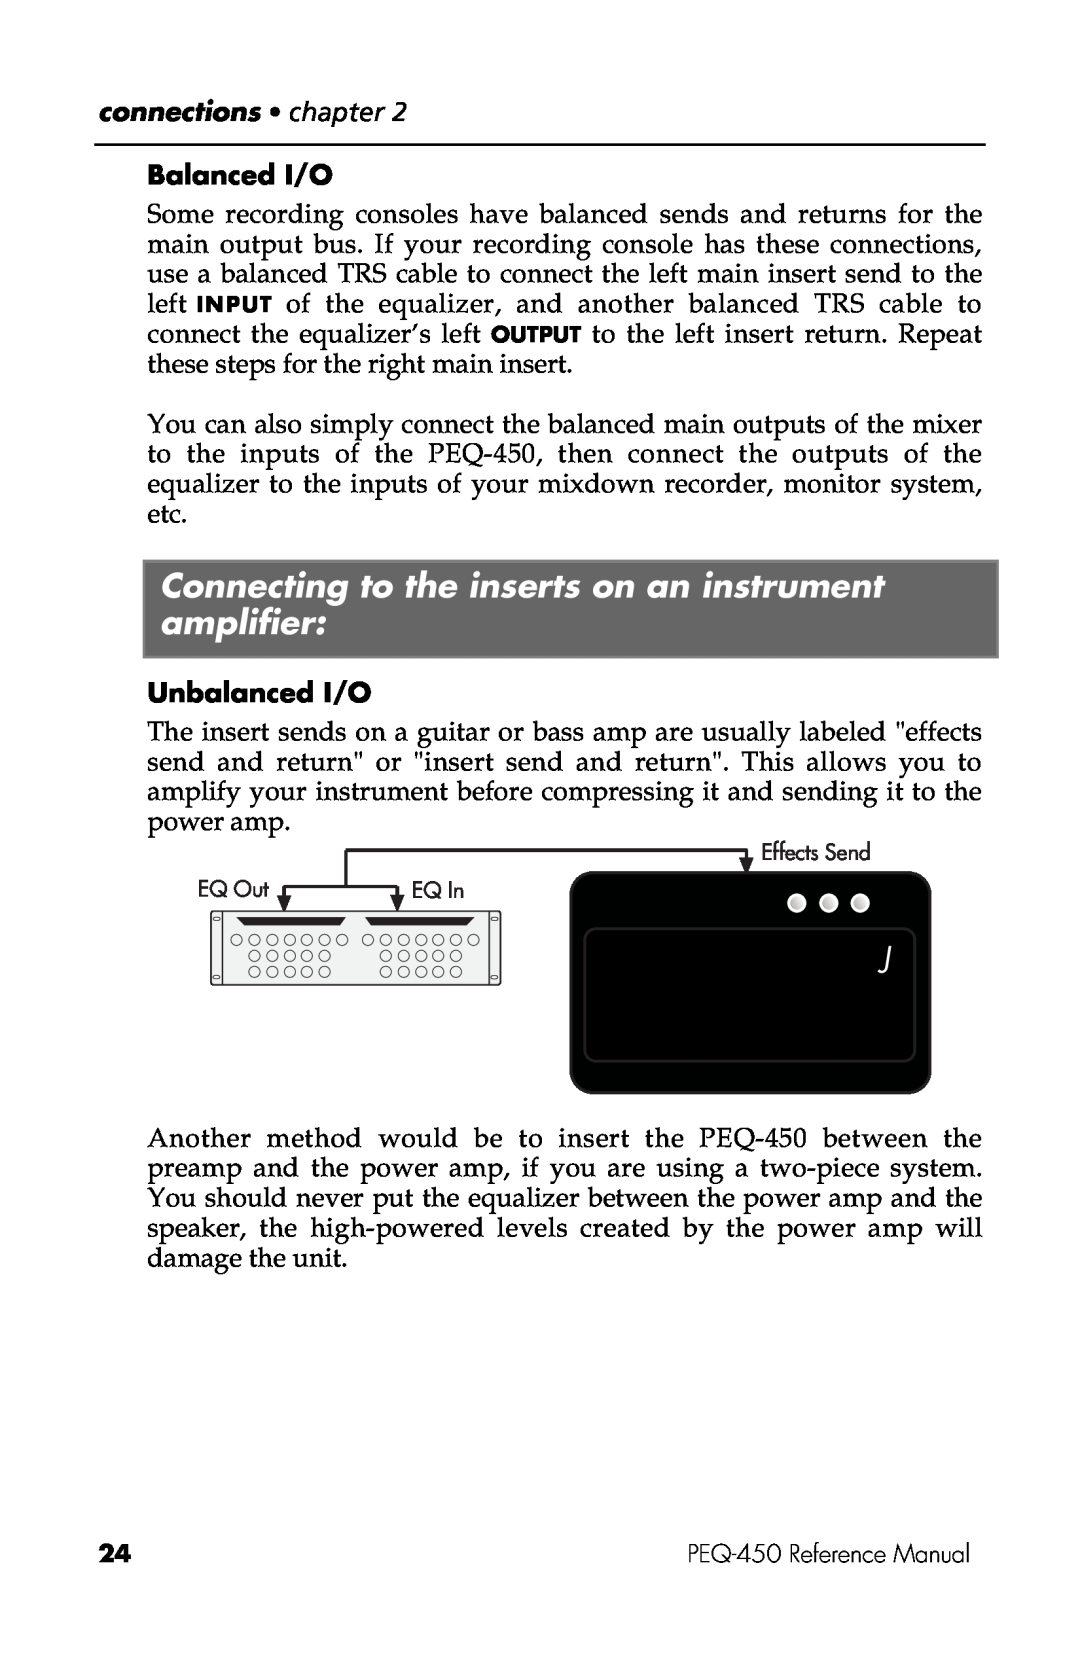 Alesis manual Balanced I/O, Unbalanced I/O, EQ Out, Effects Send EQ In, PEQ-450Reference Manual 